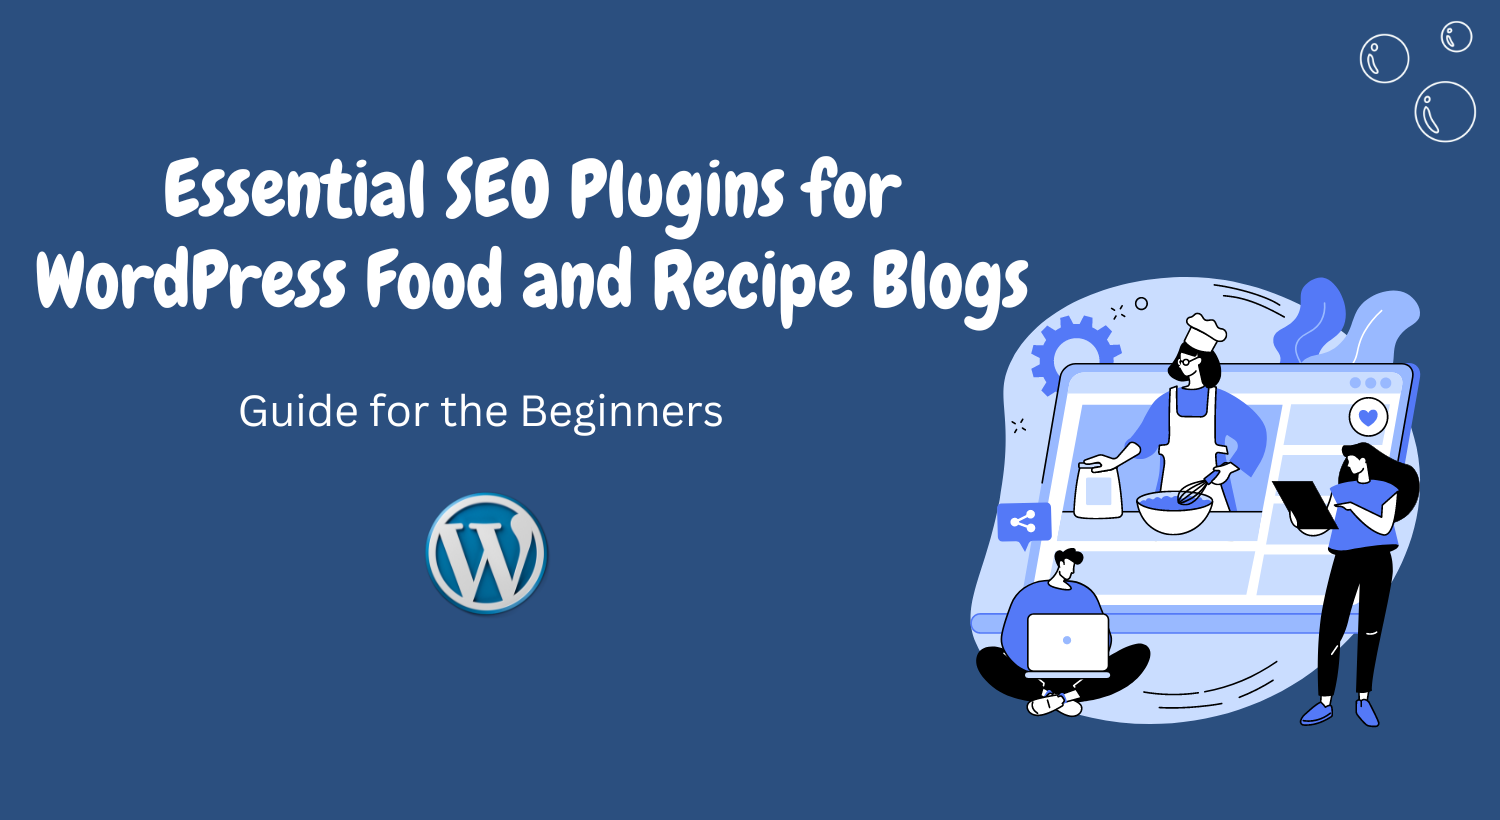 WordPress Food and Recipe Blogs